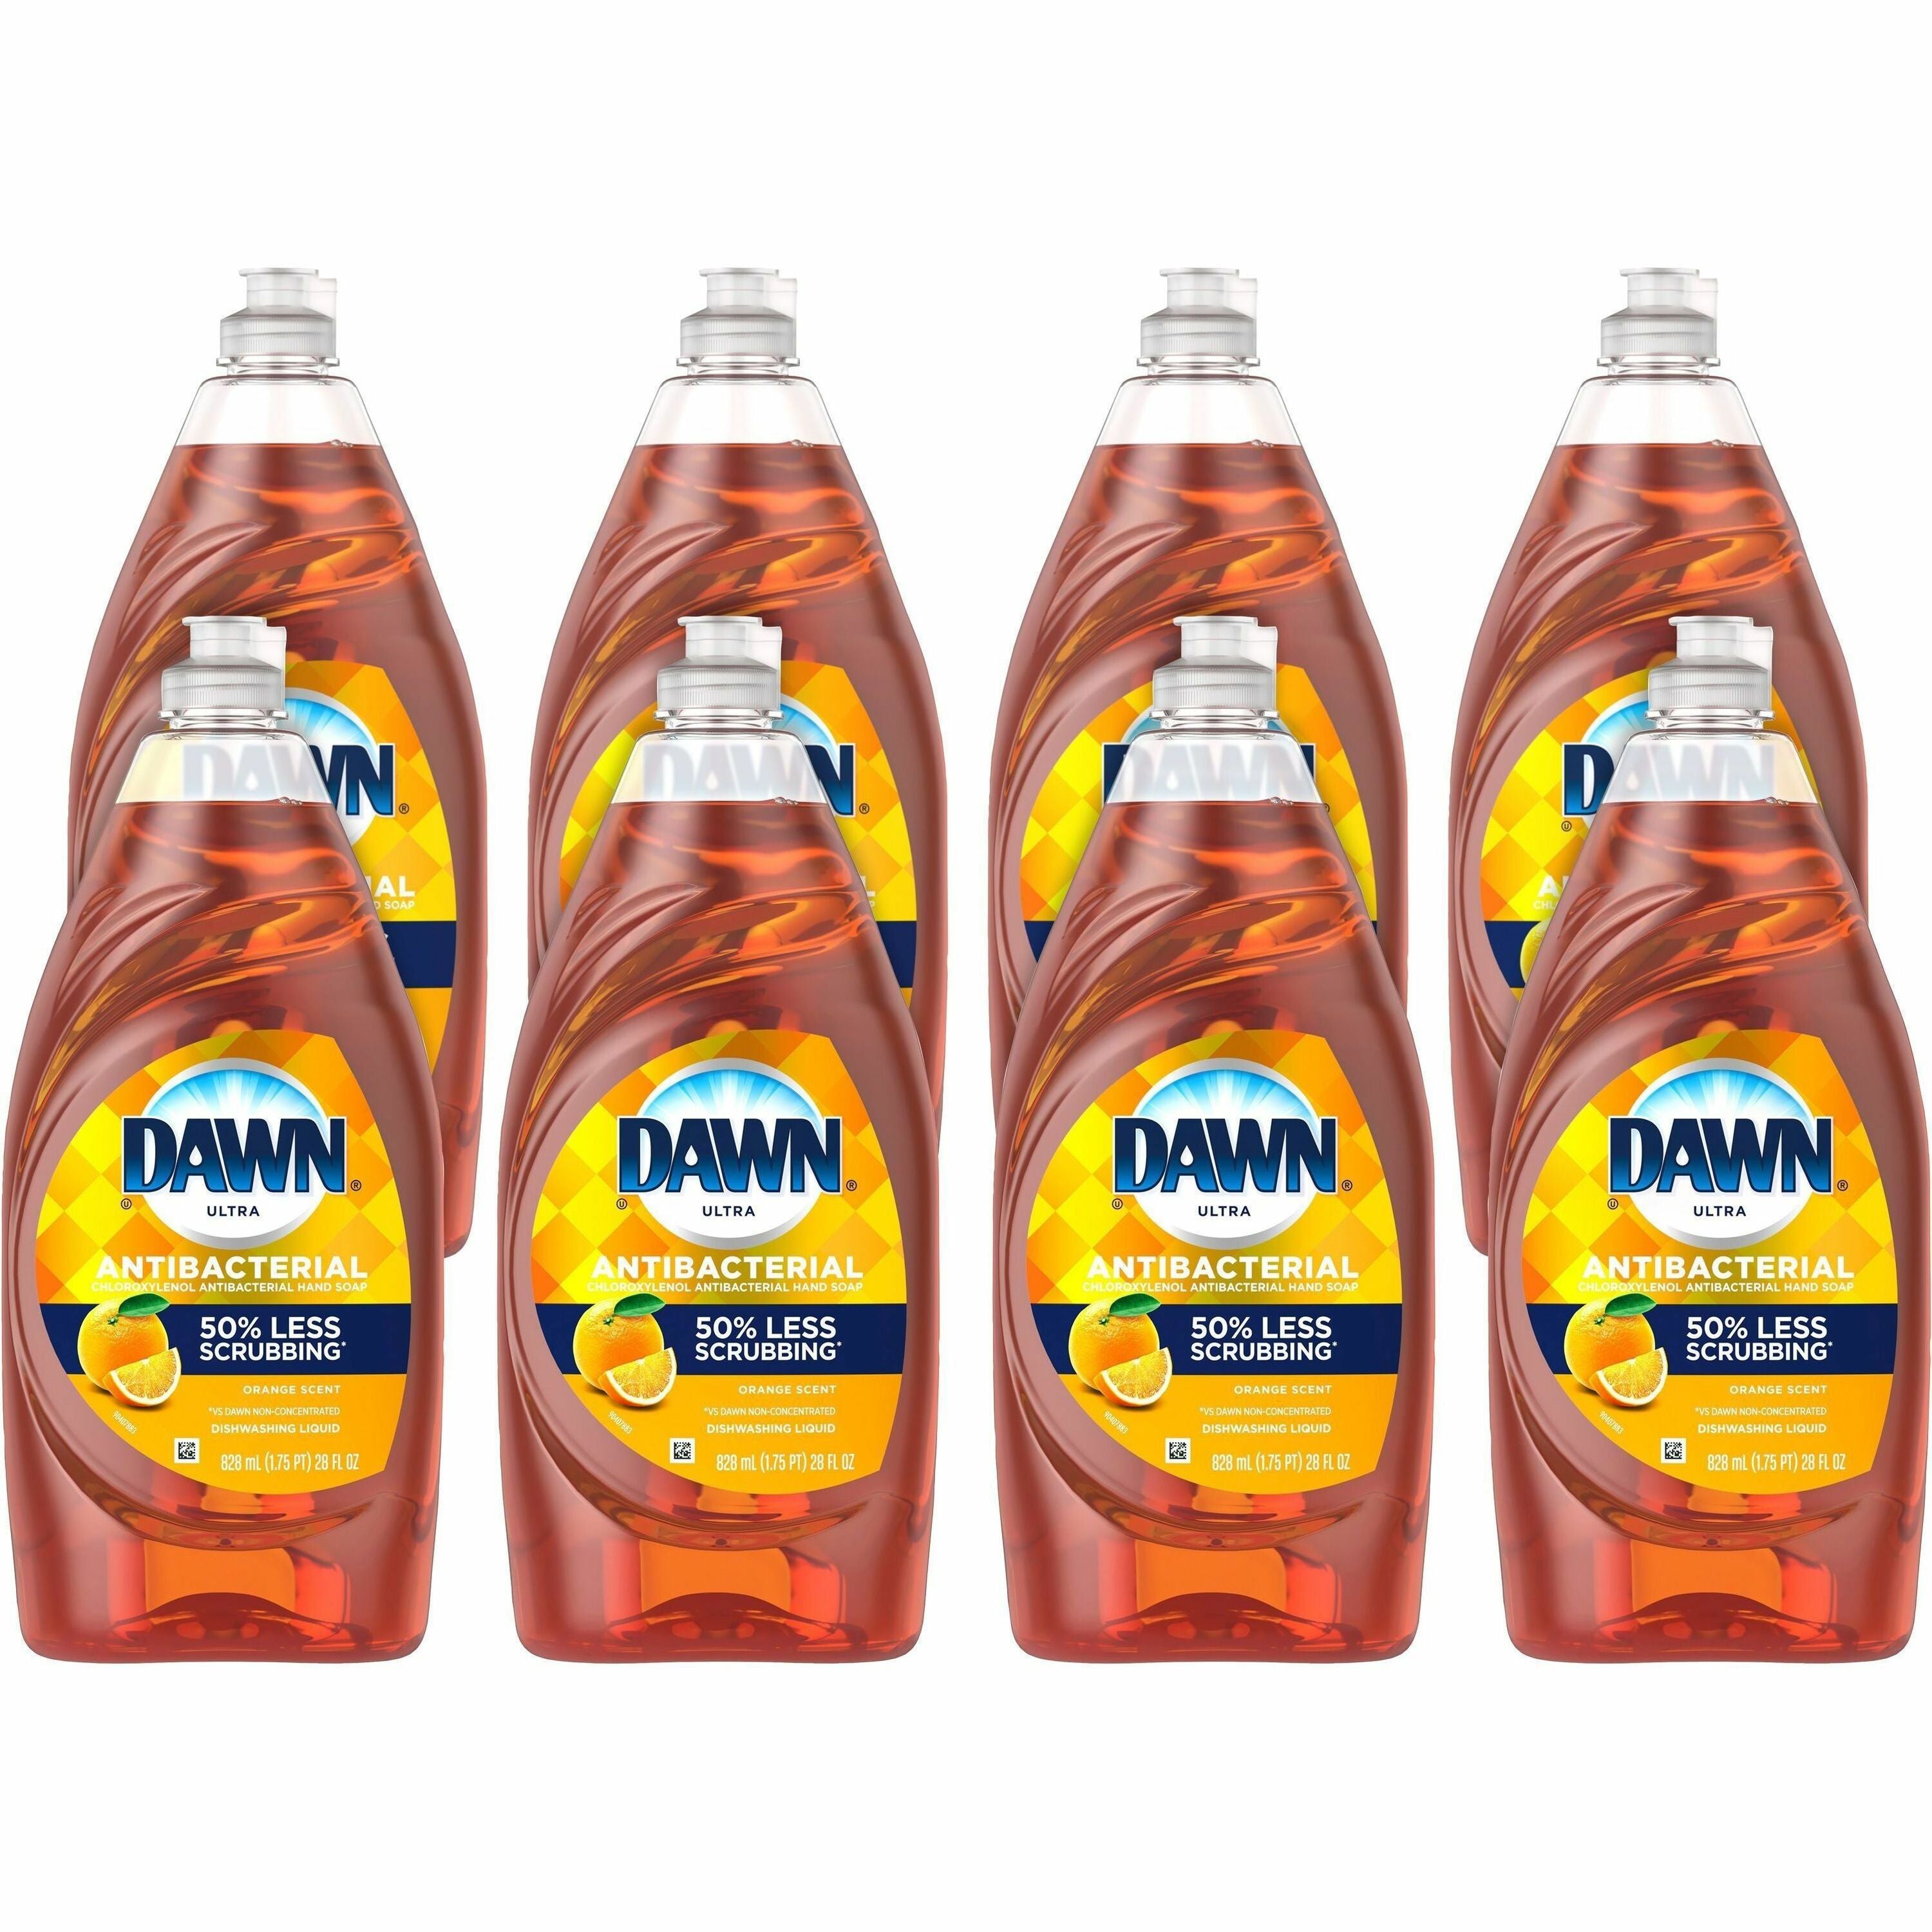 dawn-ultra-antibacterial-dish-soap-28-fl-oz-09-quart-citrus-scent-8-carton-antibacterial-residue-free-streak-free-orange_pgc97318ct - 1